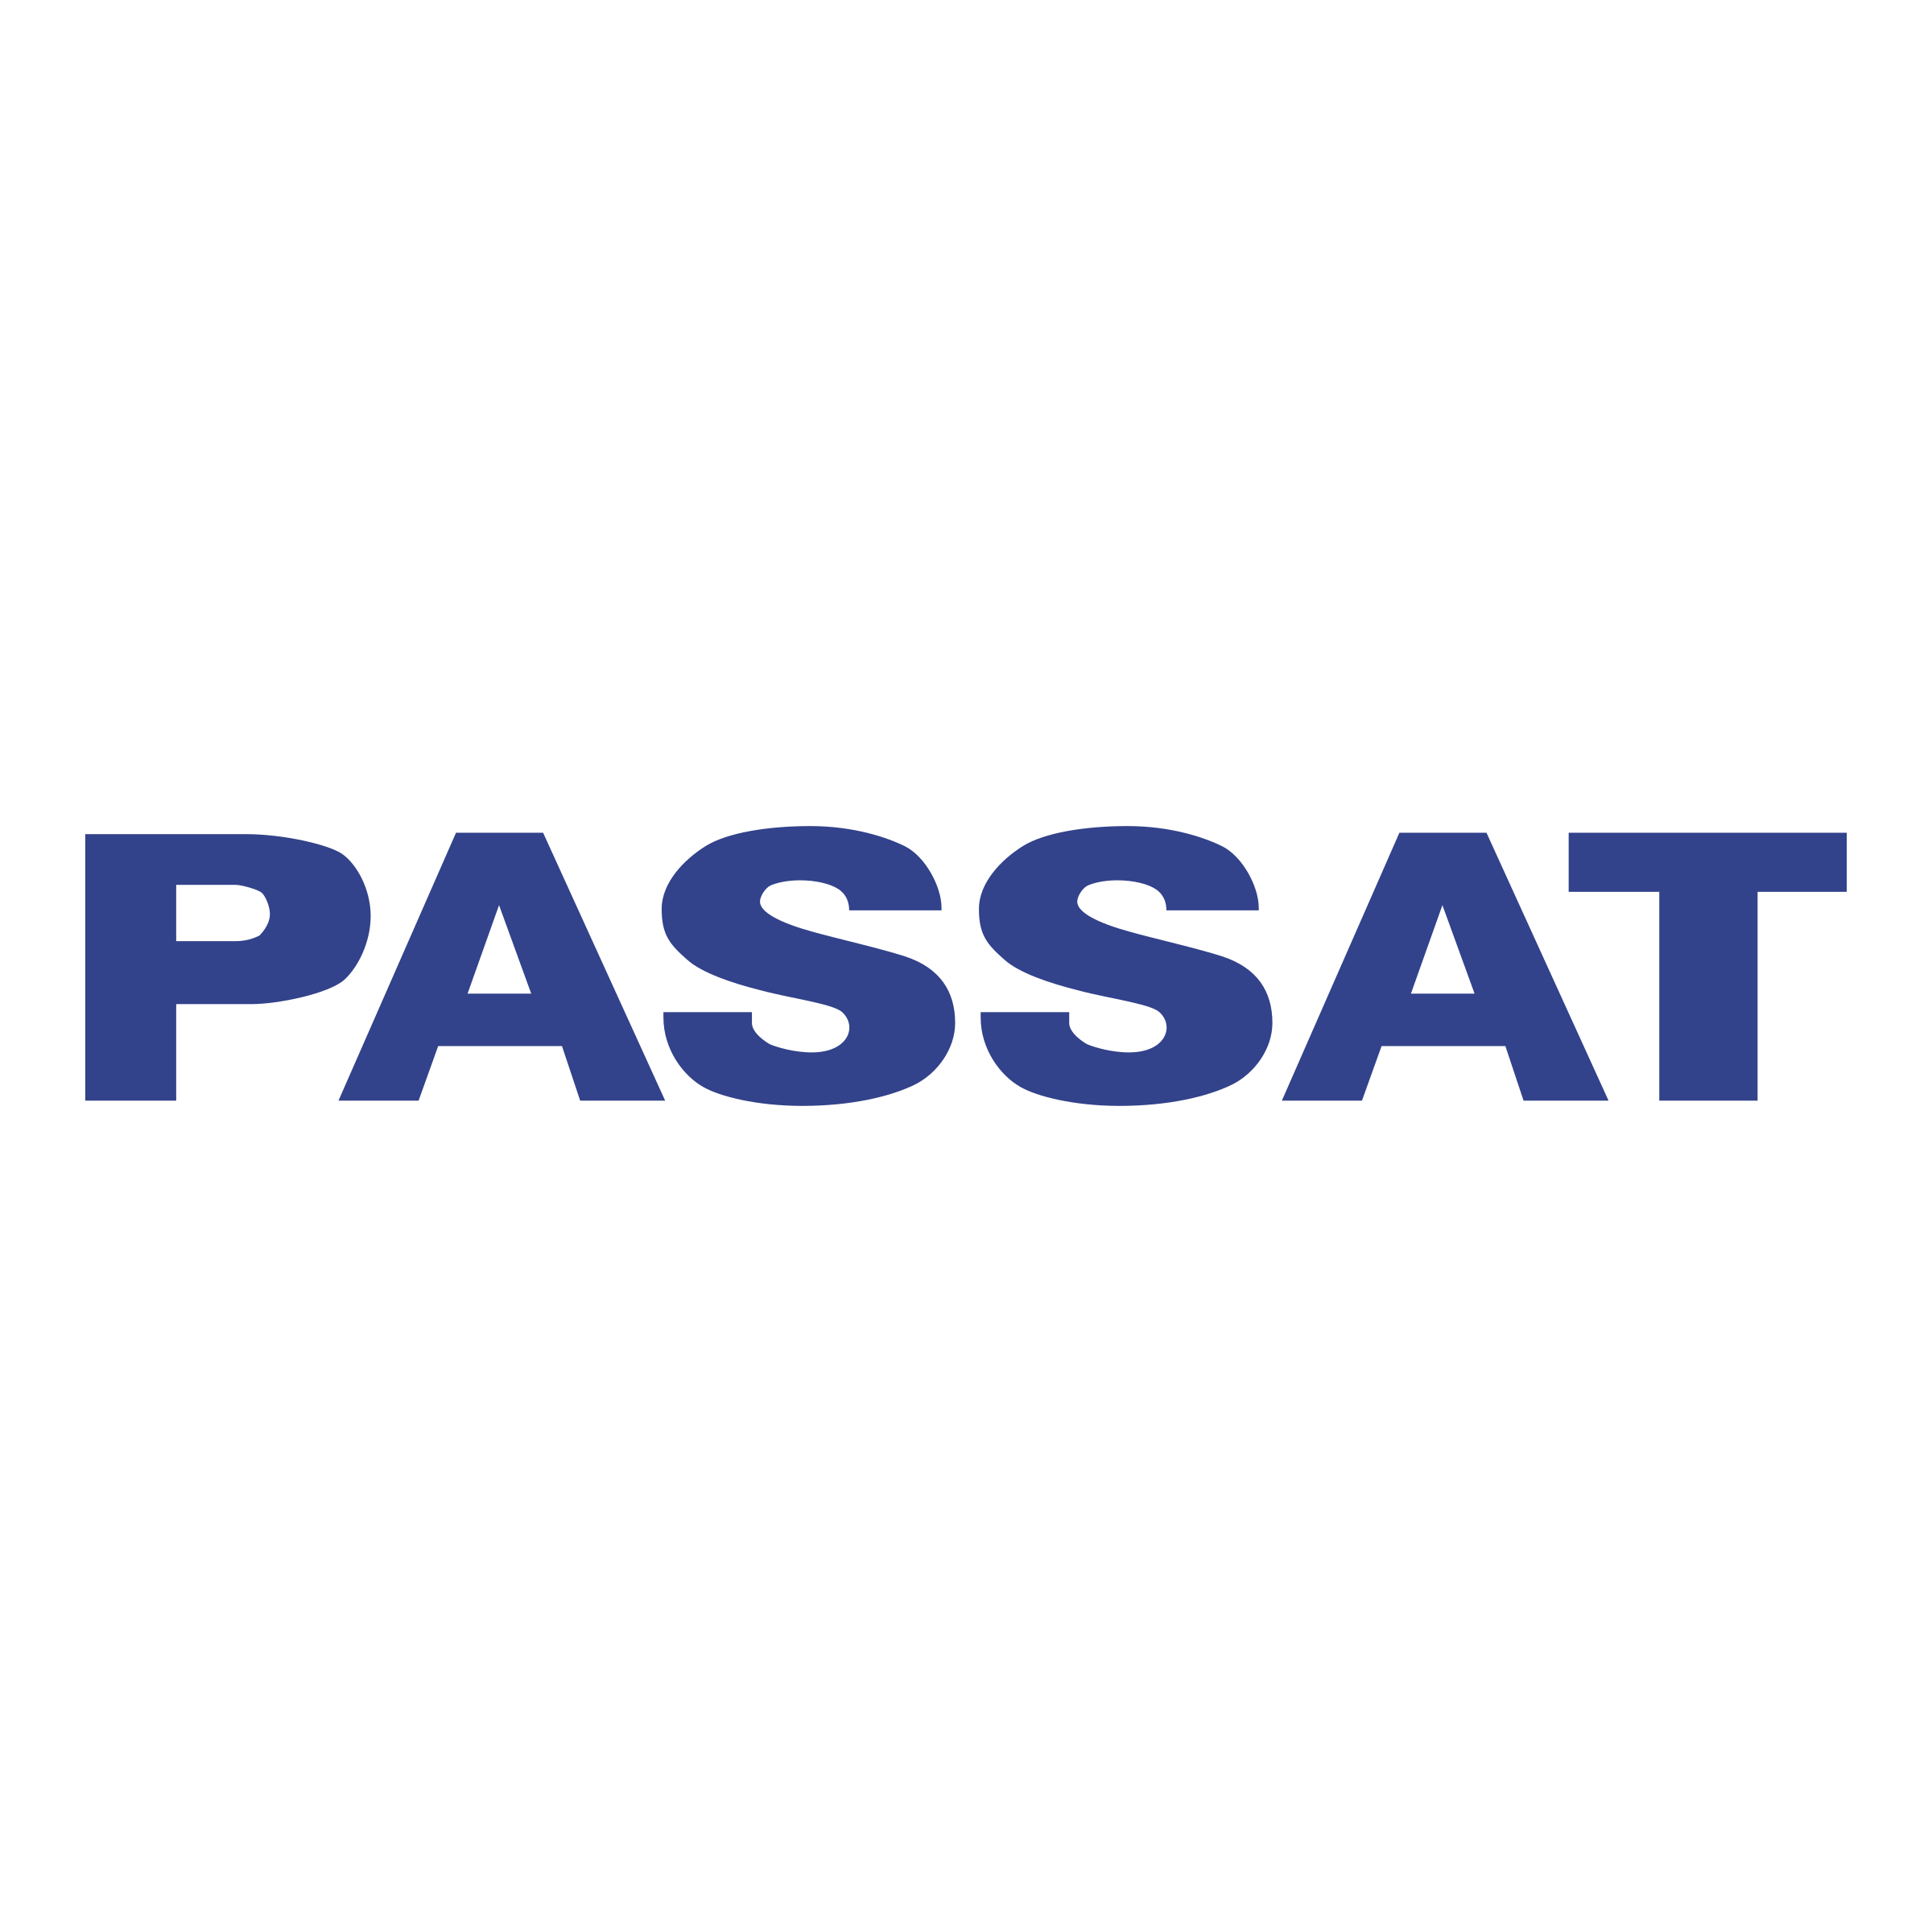 Passat Logo - Passat Logo PNG Transparent & SVG Vector - Freebie Supply